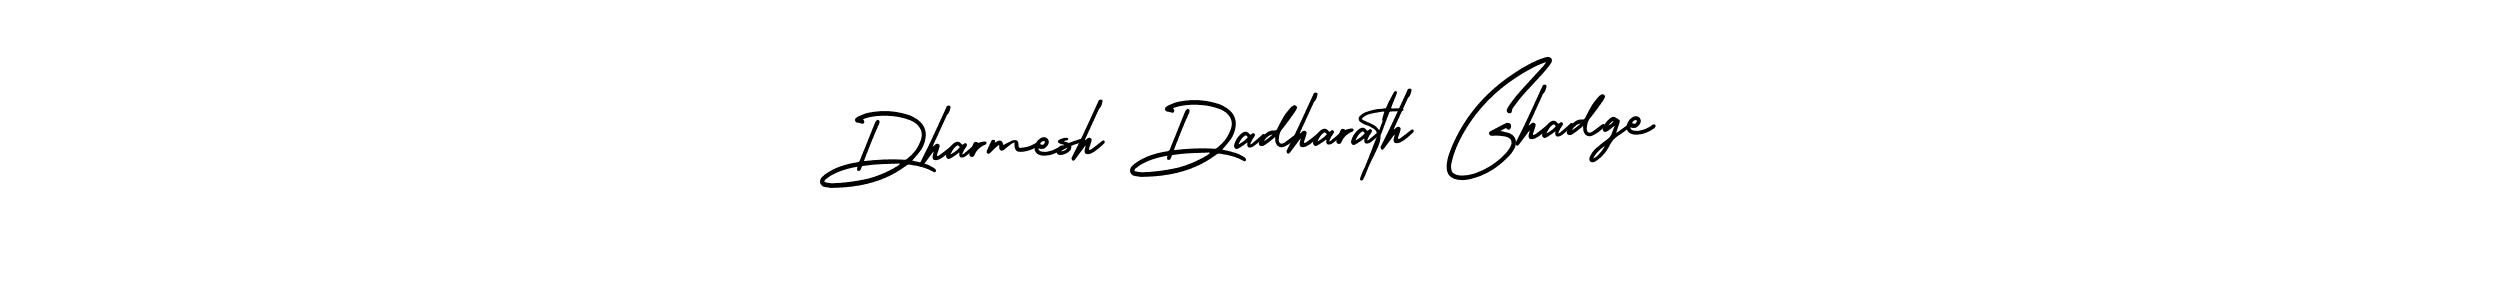 How to make Dharmesh Dadharath Ghadge signature? AmerikaSignatureDemo-Regular is a professional autograph style. Create handwritten signature for Dharmesh Dadharath Ghadge name. Dharmesh Dadharath Ghadge signature style 3 images and pictures png